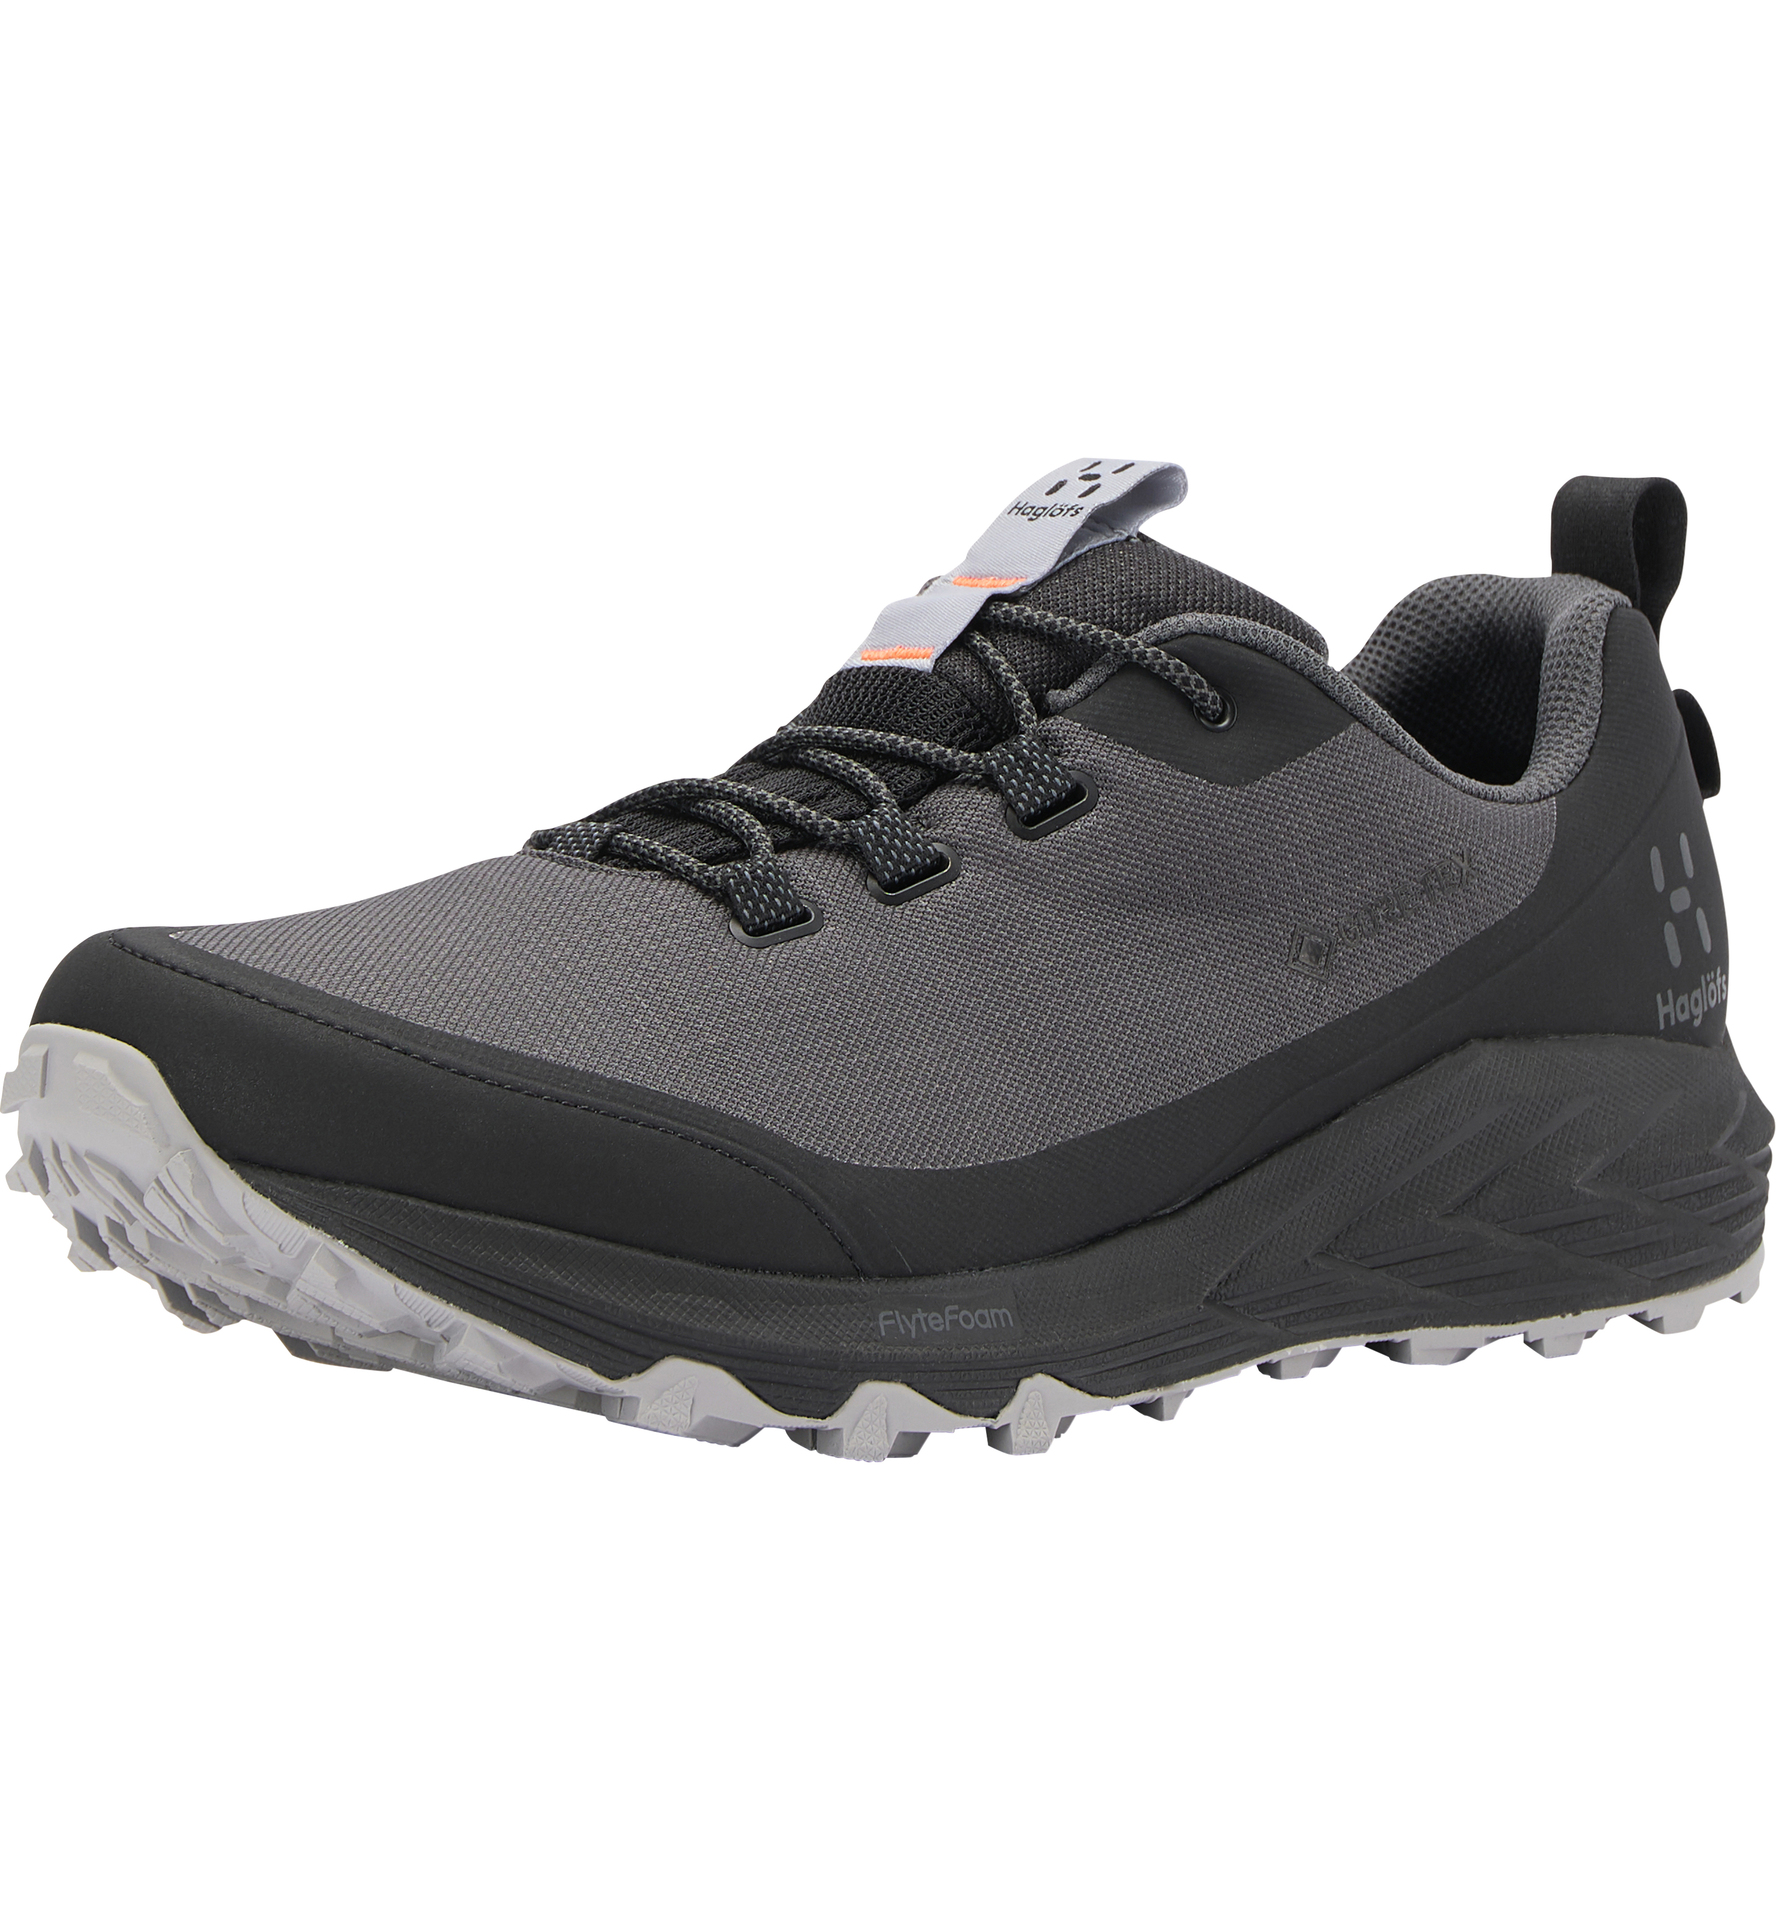 Haglöfs  FH GTX Low Men | True Black | Boots | Shoes | Activities |  Hiking shoes | Hiking | Activities | Boots | Shoes | Men  |  Collection | Hiking boots | Hiking shoes | Hiking | GORE-TEX shoes | Haglöfs